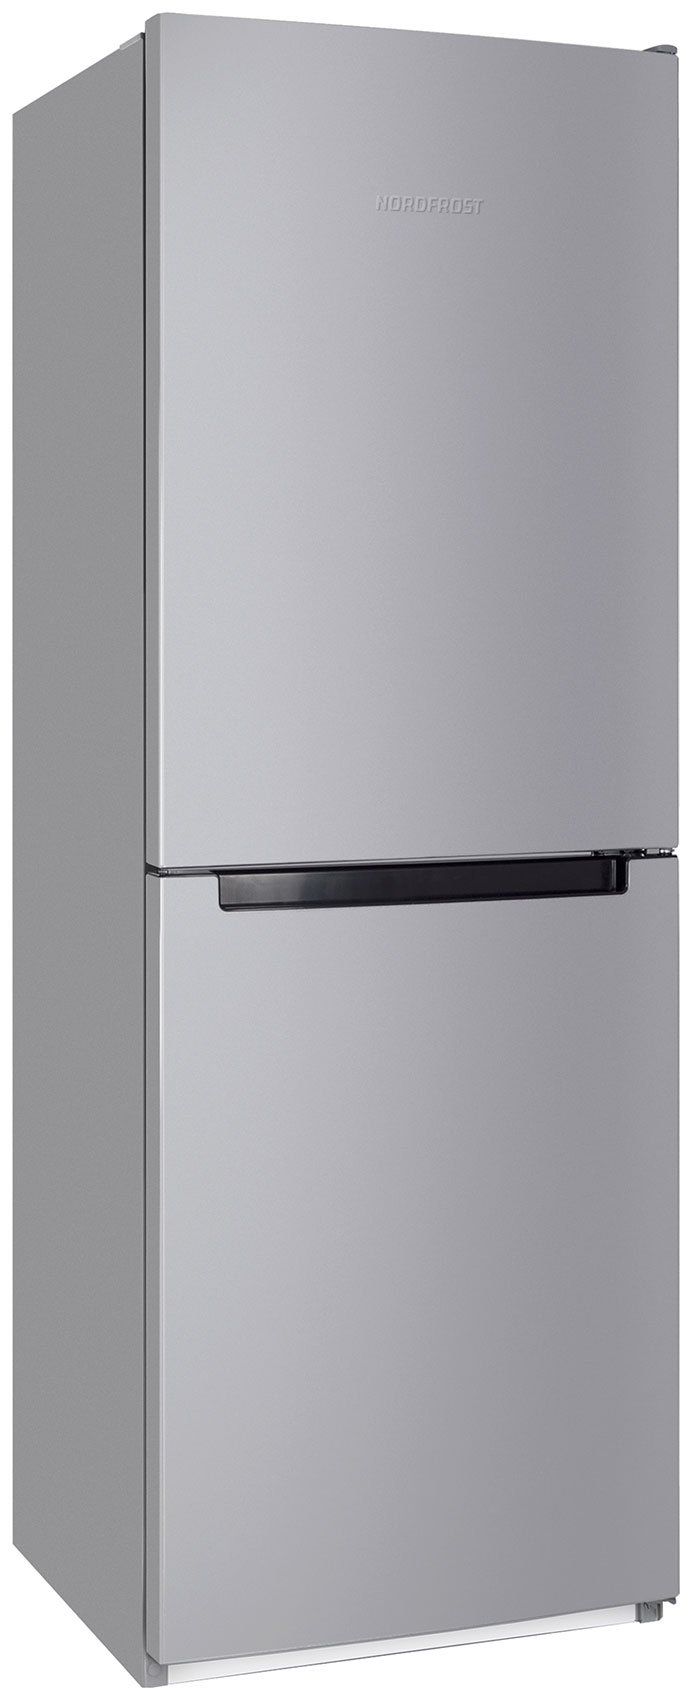 Холодильник NordFrost NRB 151 S серебристый холодильник chiq cbm317ns серебристый